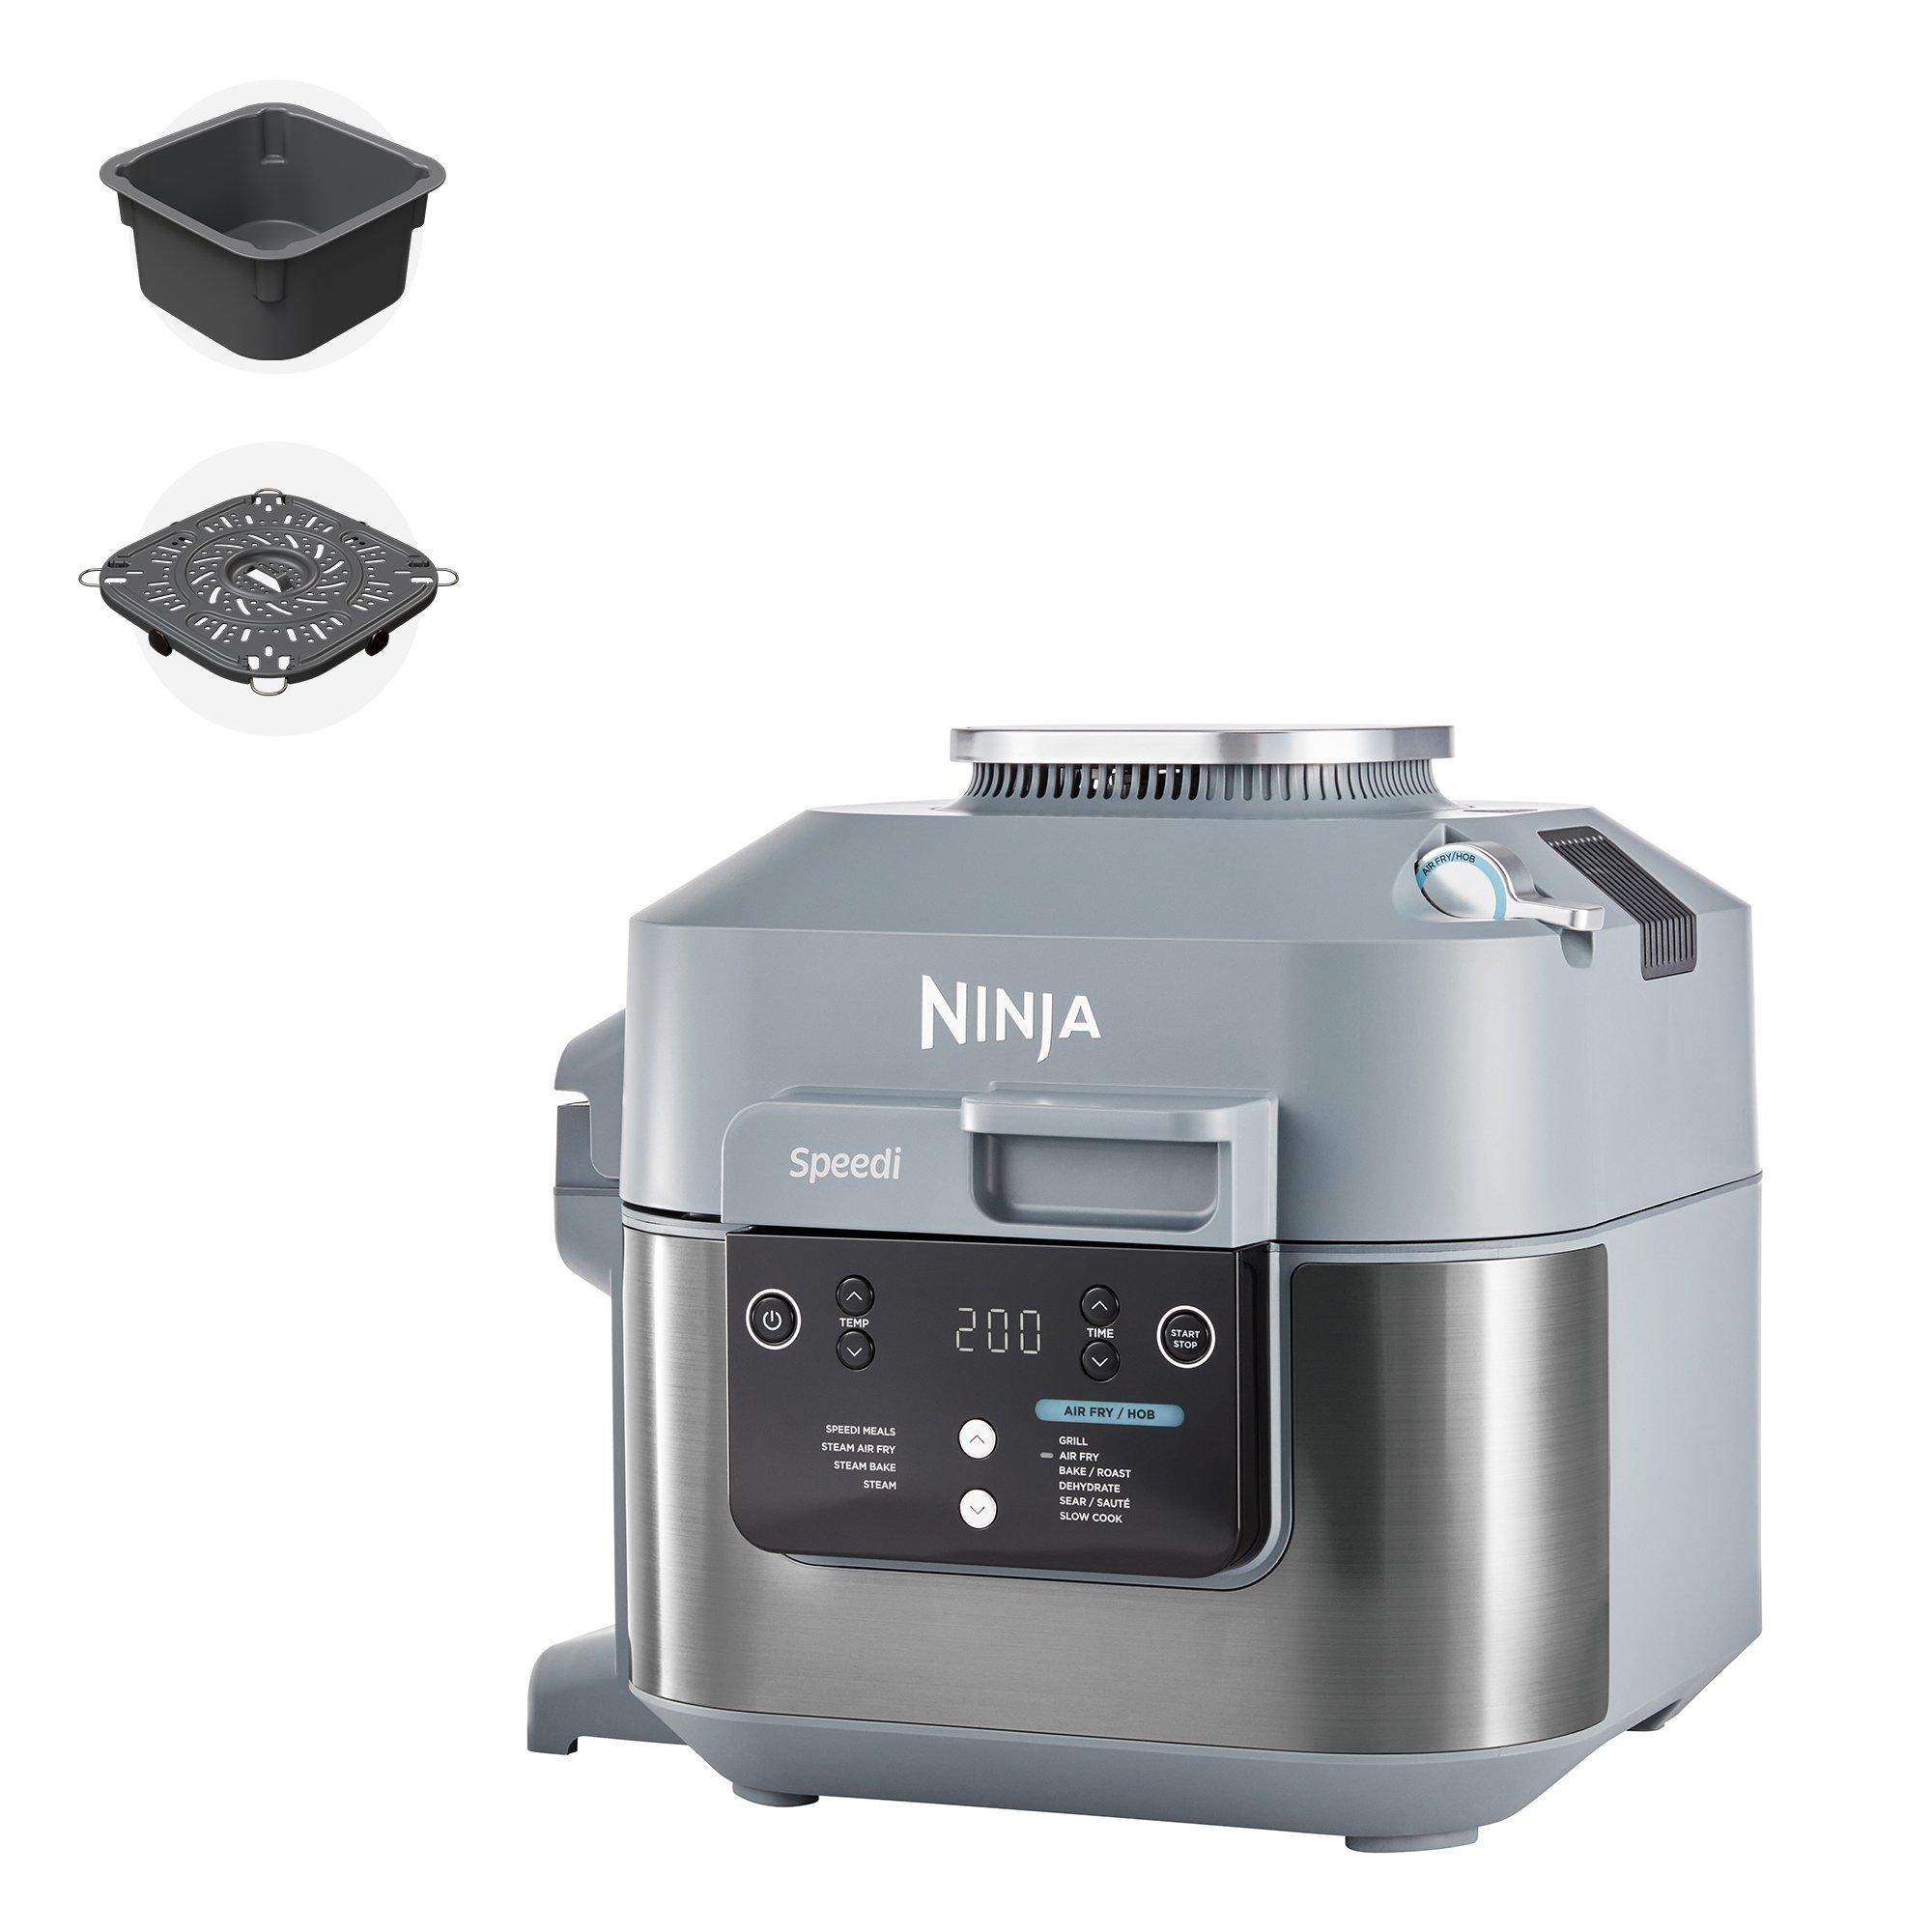 https://i1.adis.ws/s/euronics/NINON400UK-ms/Catalogue/Small-Appliances/Small-Cooking-Appliances/Multi-Cookers/Ninja-ON400UK-Speedi-10-in-1-Rapid-Cooker-%26-Air-Fryer---Grey.jpg?locale=en-GB,en-*,*&$carousel$